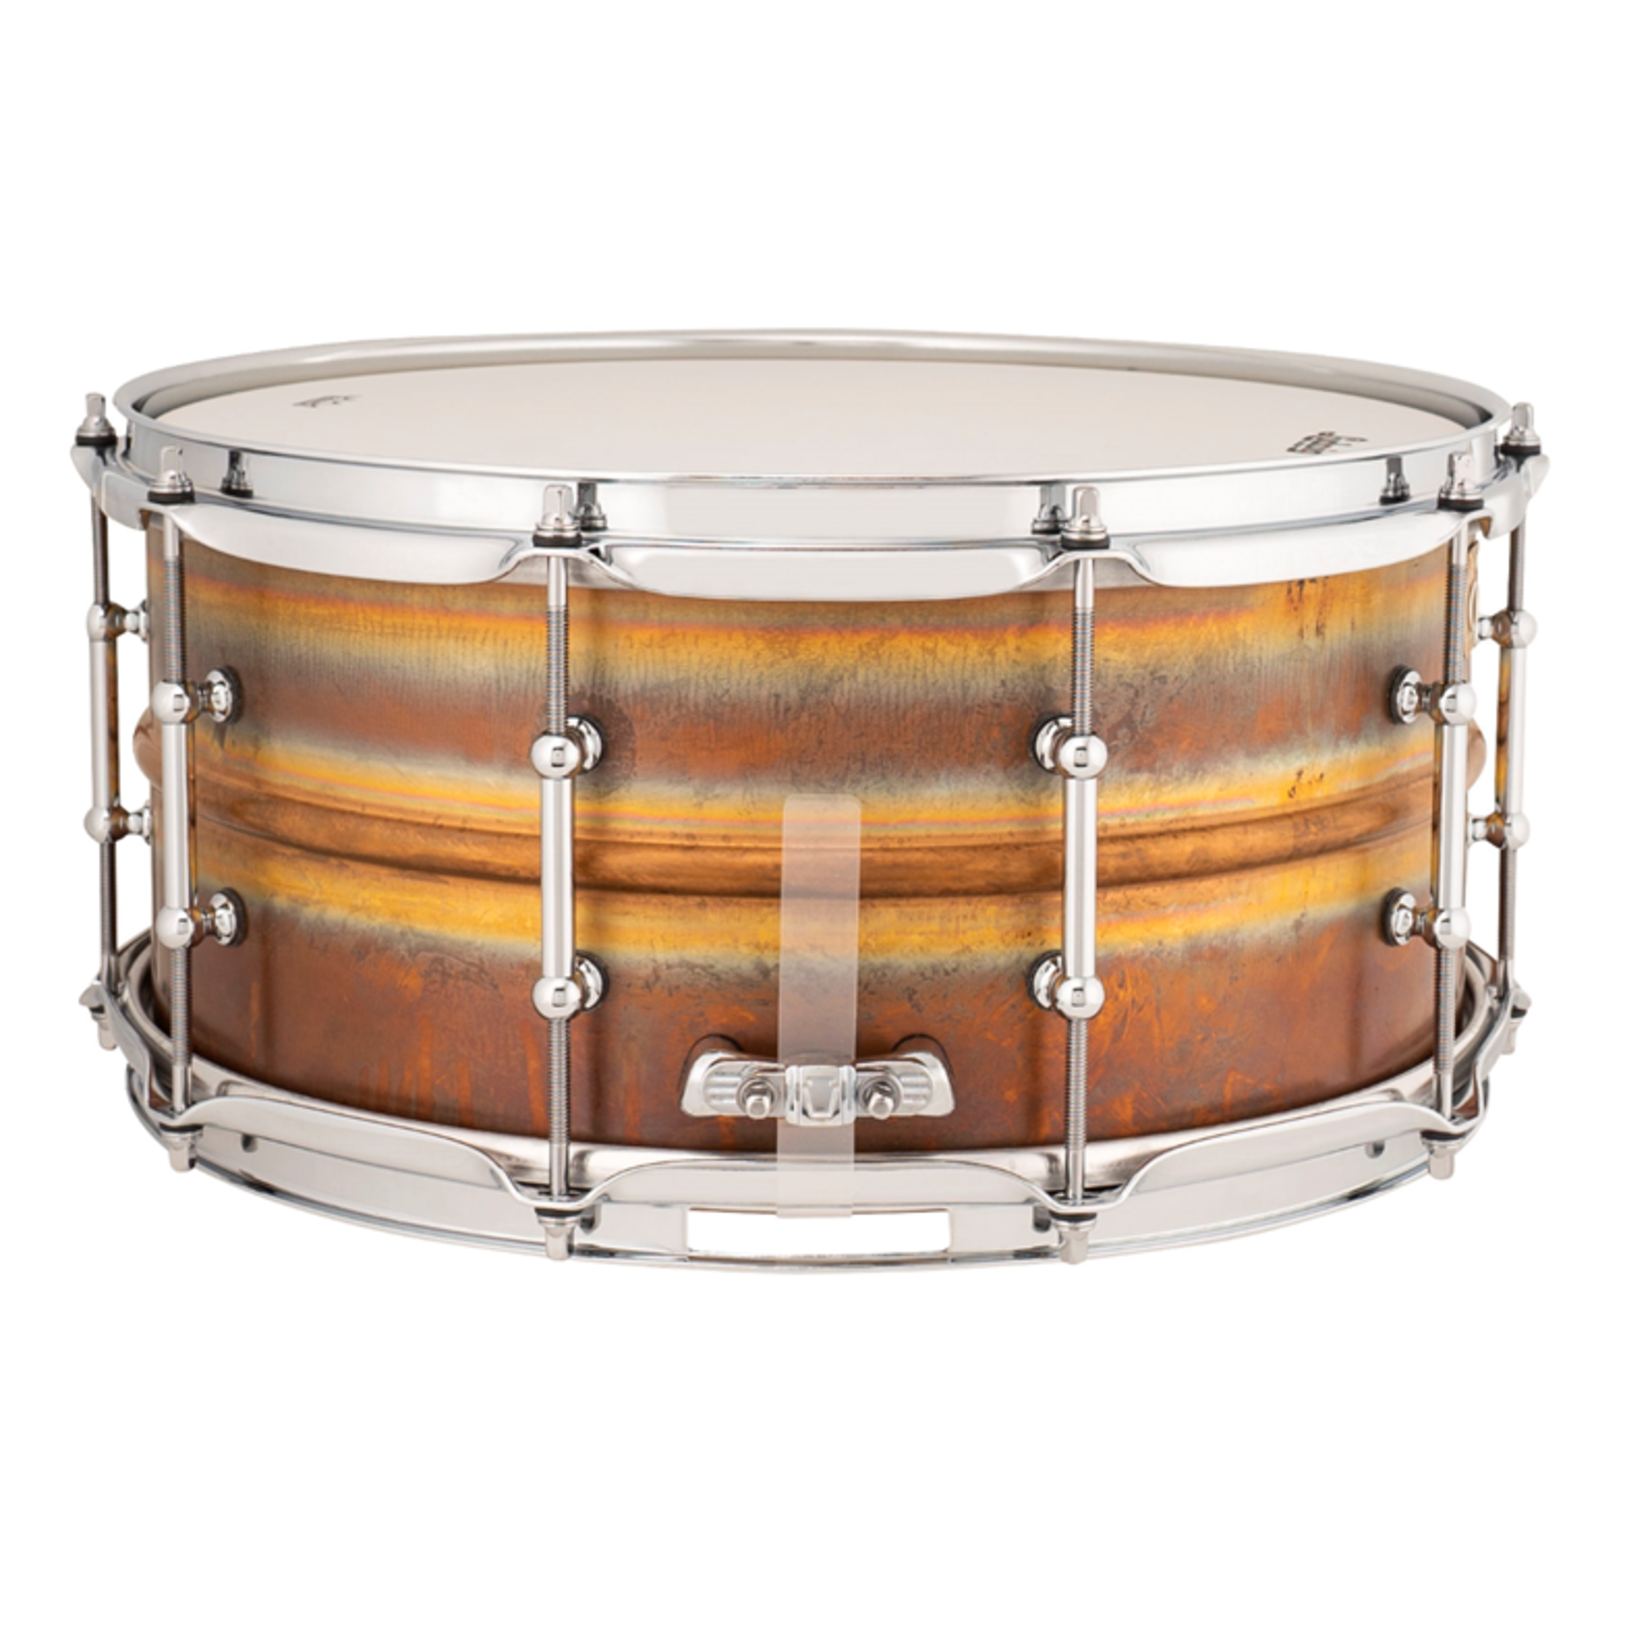 Ludwig Ludwig 6.5x14" Raw Bronze Phonic Snare Drum w/ Tube Lugs LB552RT